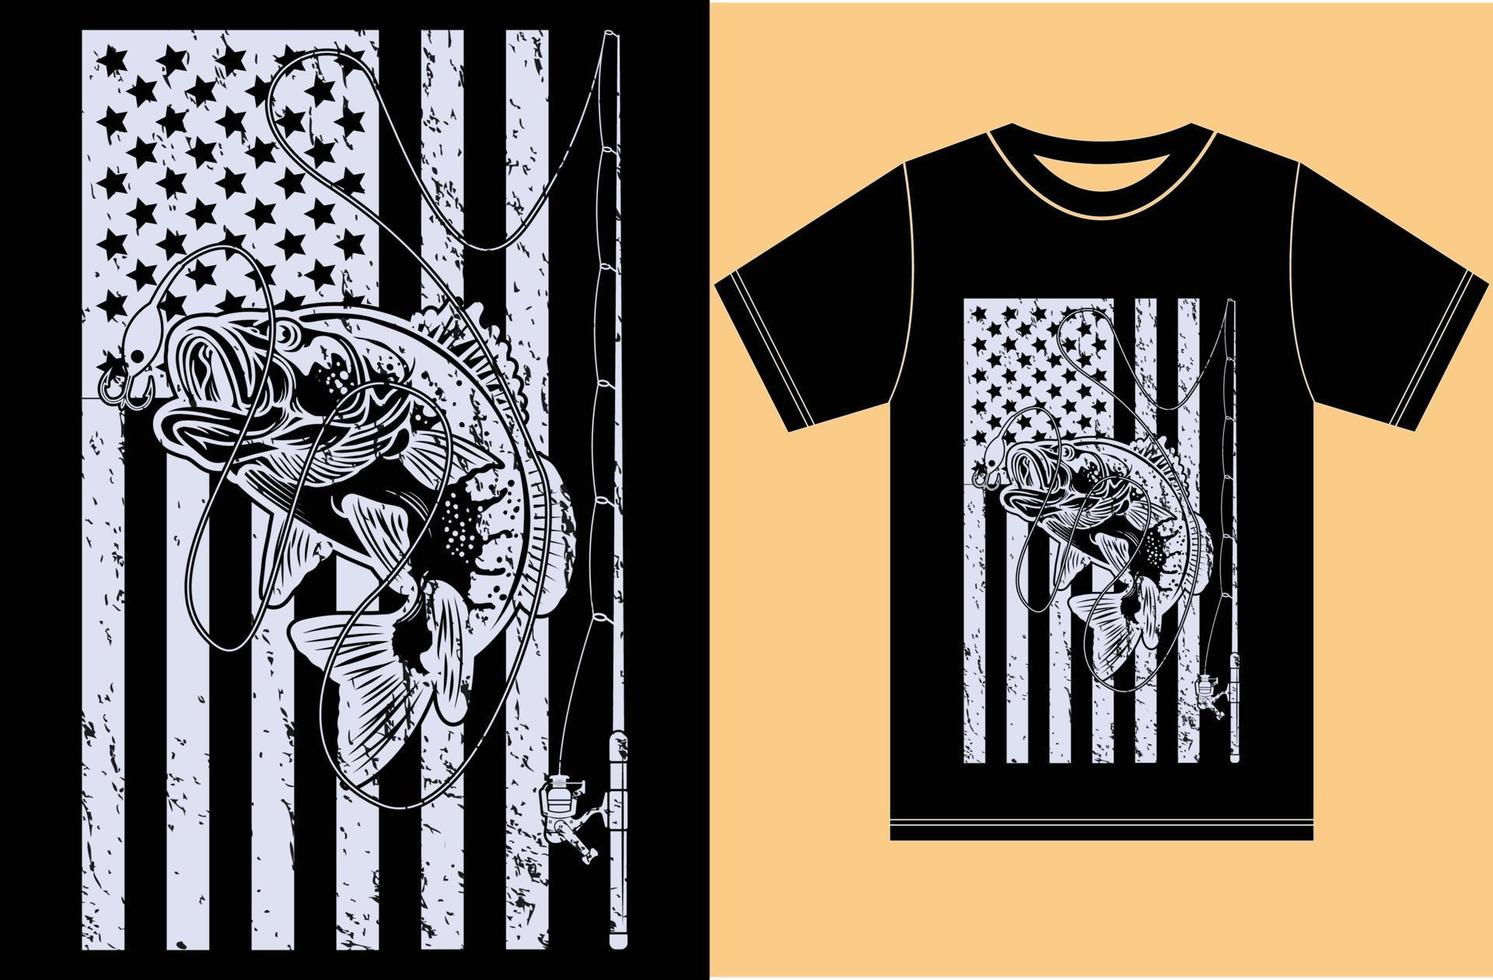 usa vlag met vissen t-shirt design. t-shirt cadeau voor liefhebbers van vissen. Amerikaanse vlag vector visserij t-shirt.